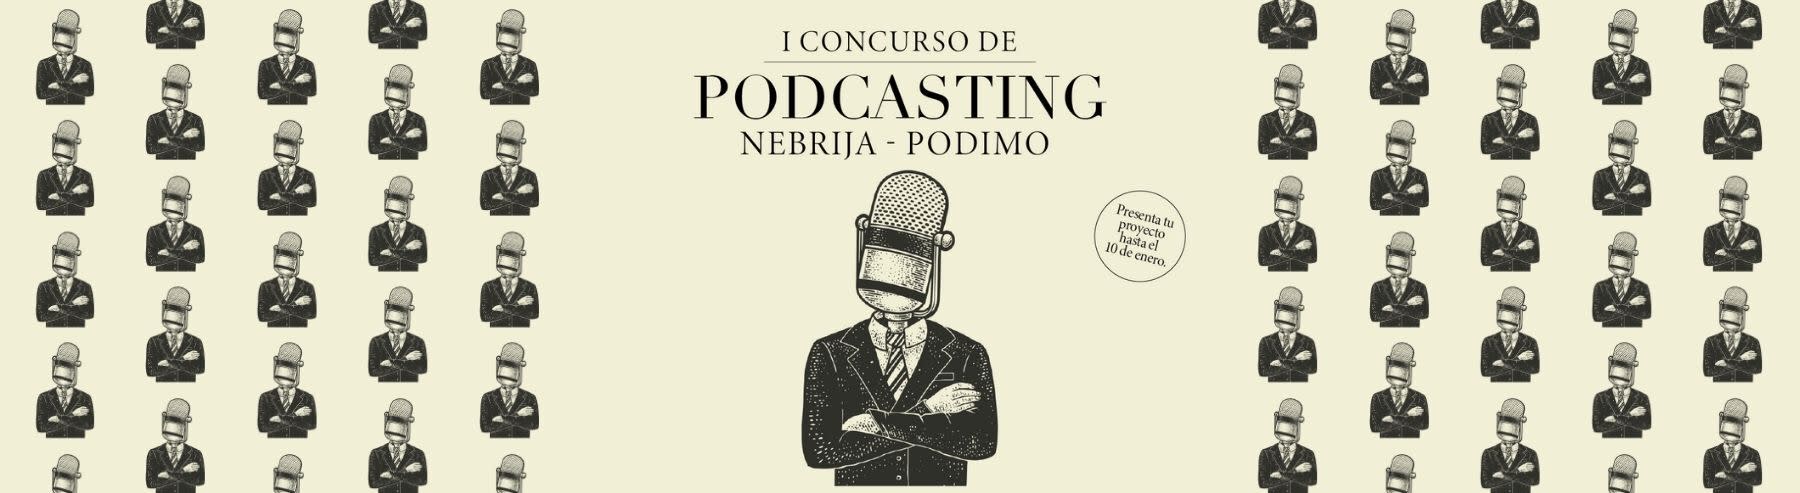 Primer concurso podcasting Universidad Nebrija y Podimo